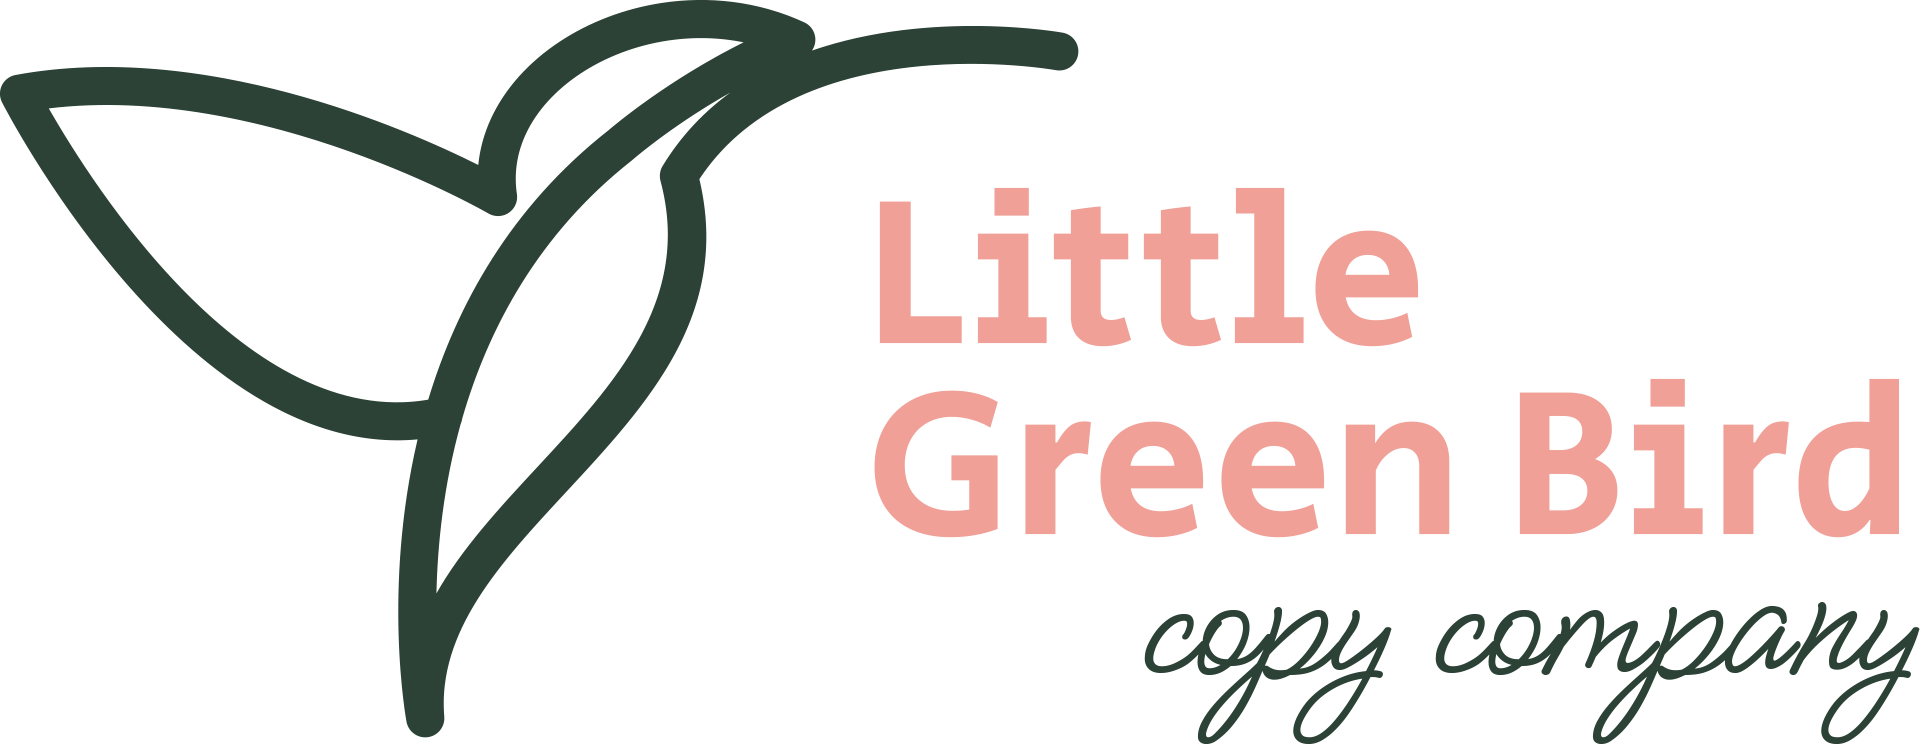 Little Green Bird Copy Company 